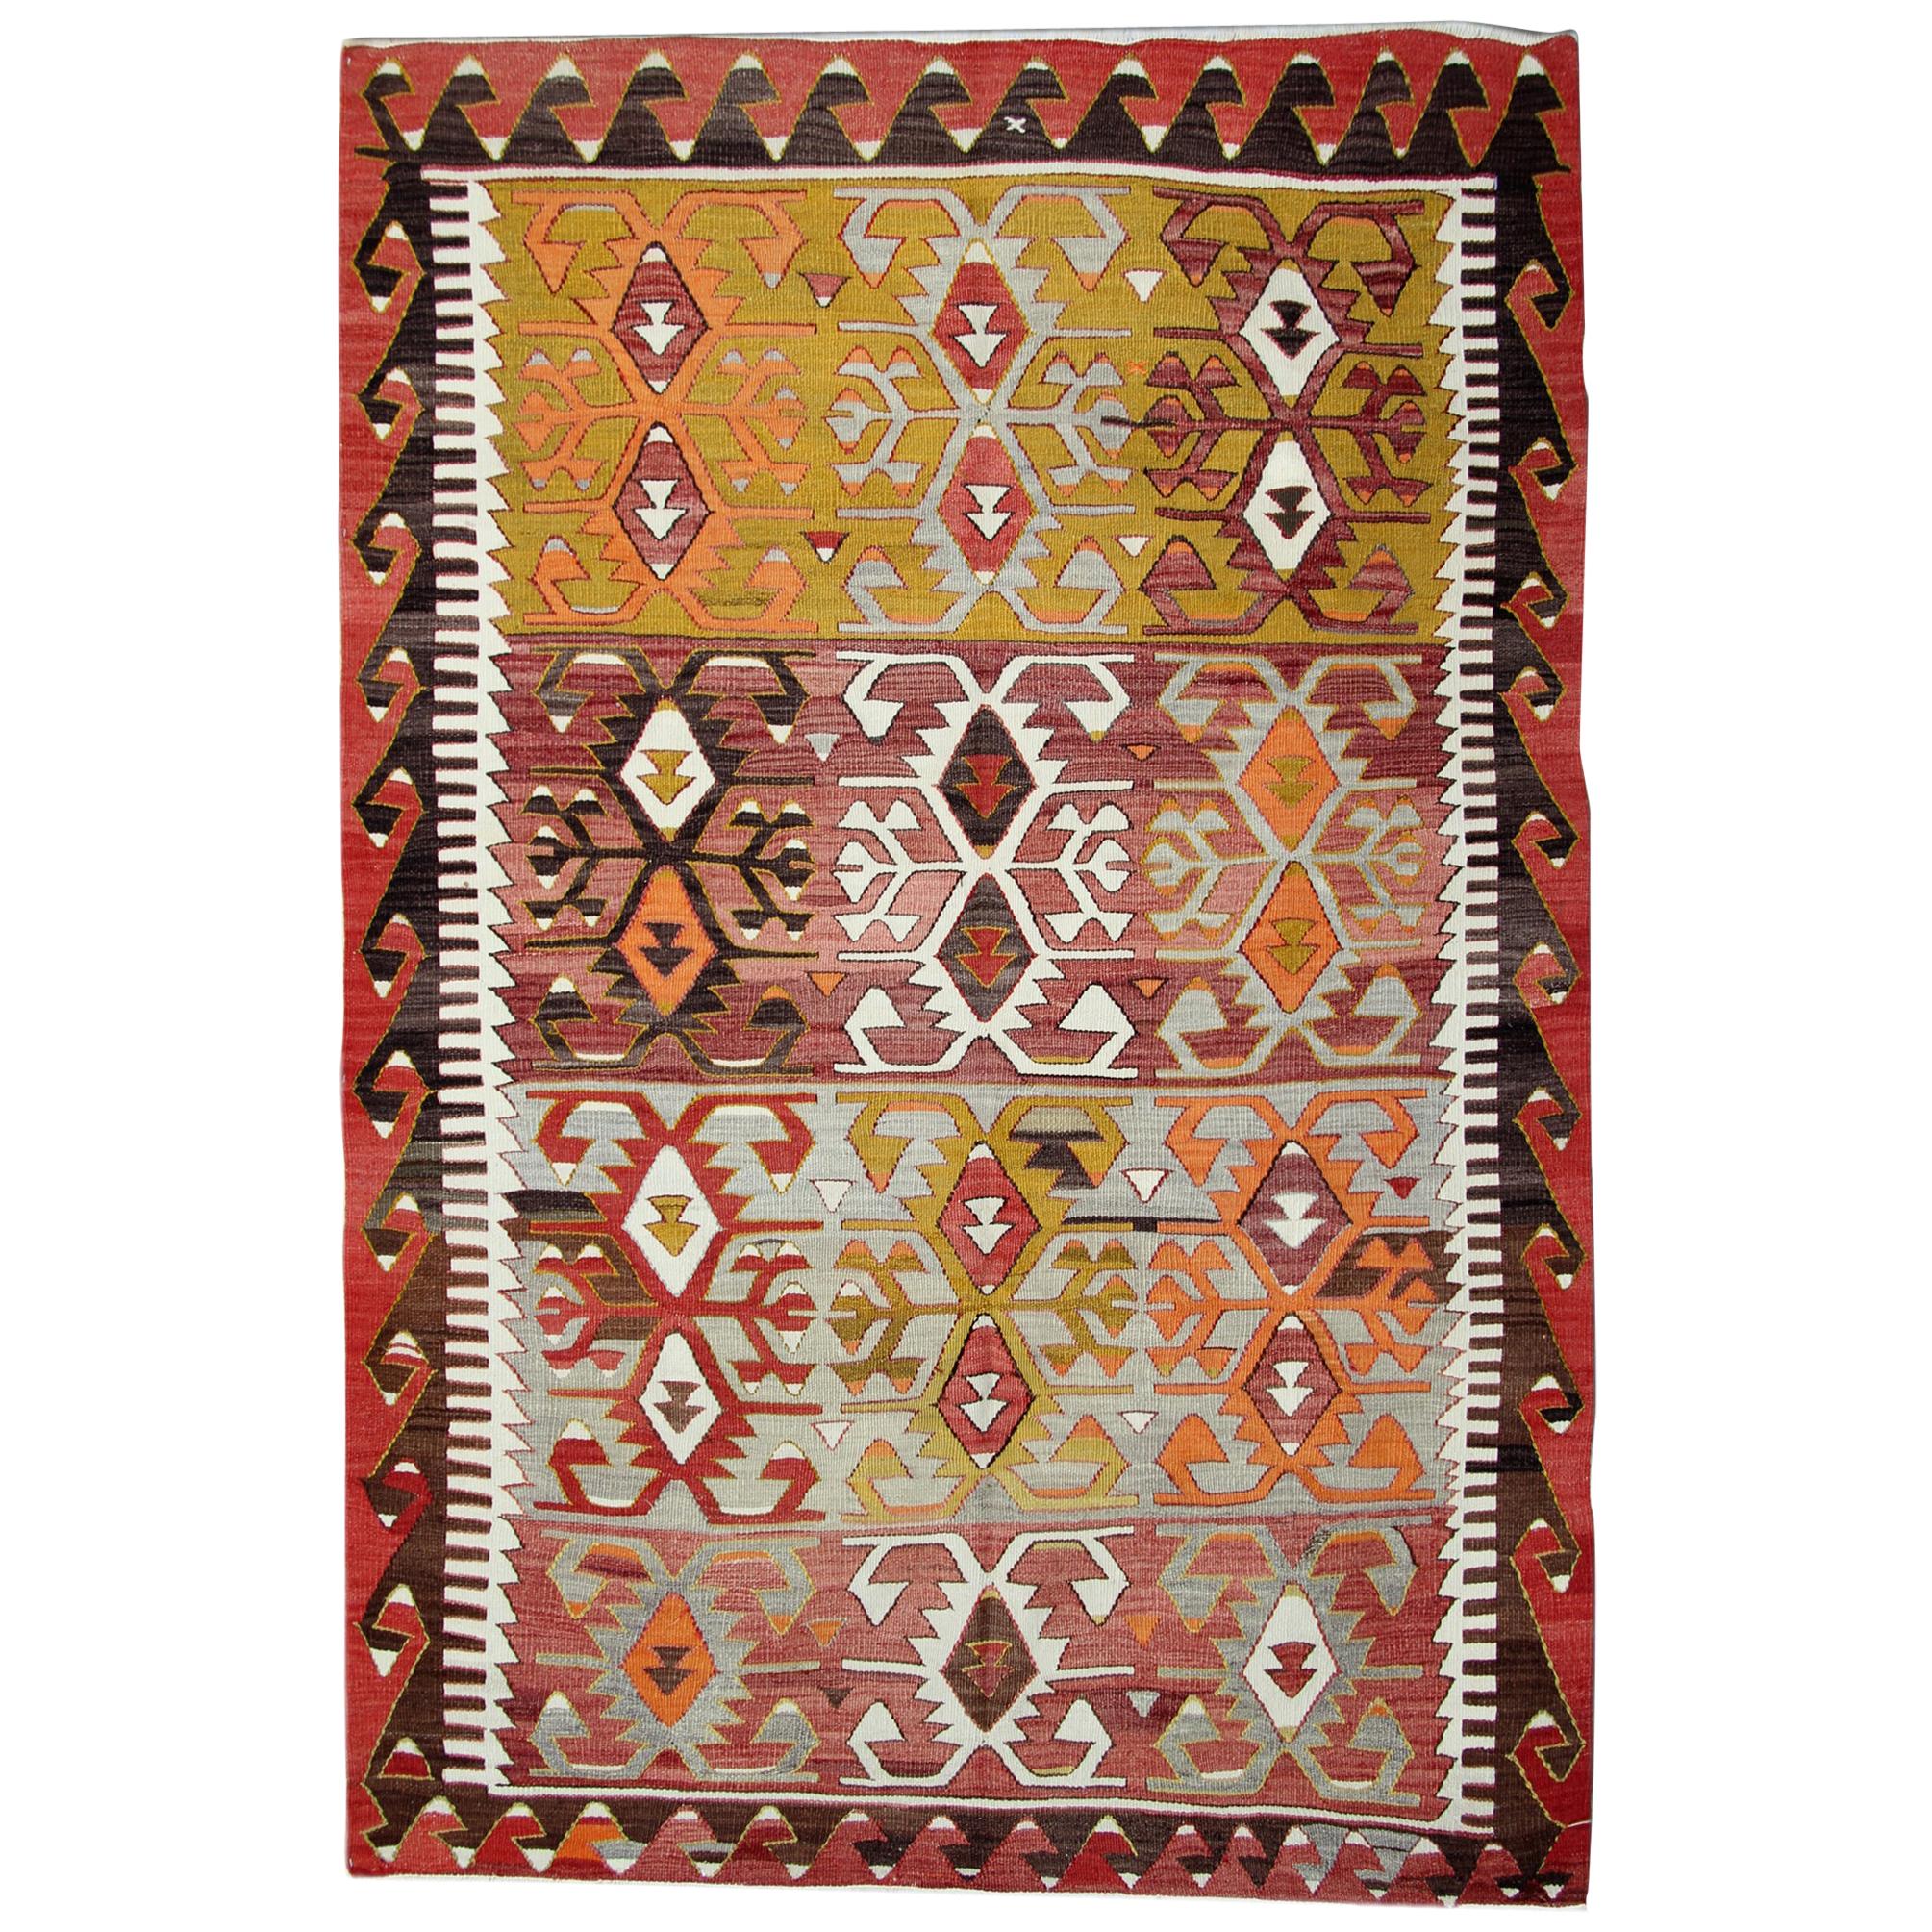 Antique Kilim Rugs, Traditional Oriental Rugs, Turkish Handmade Carpet